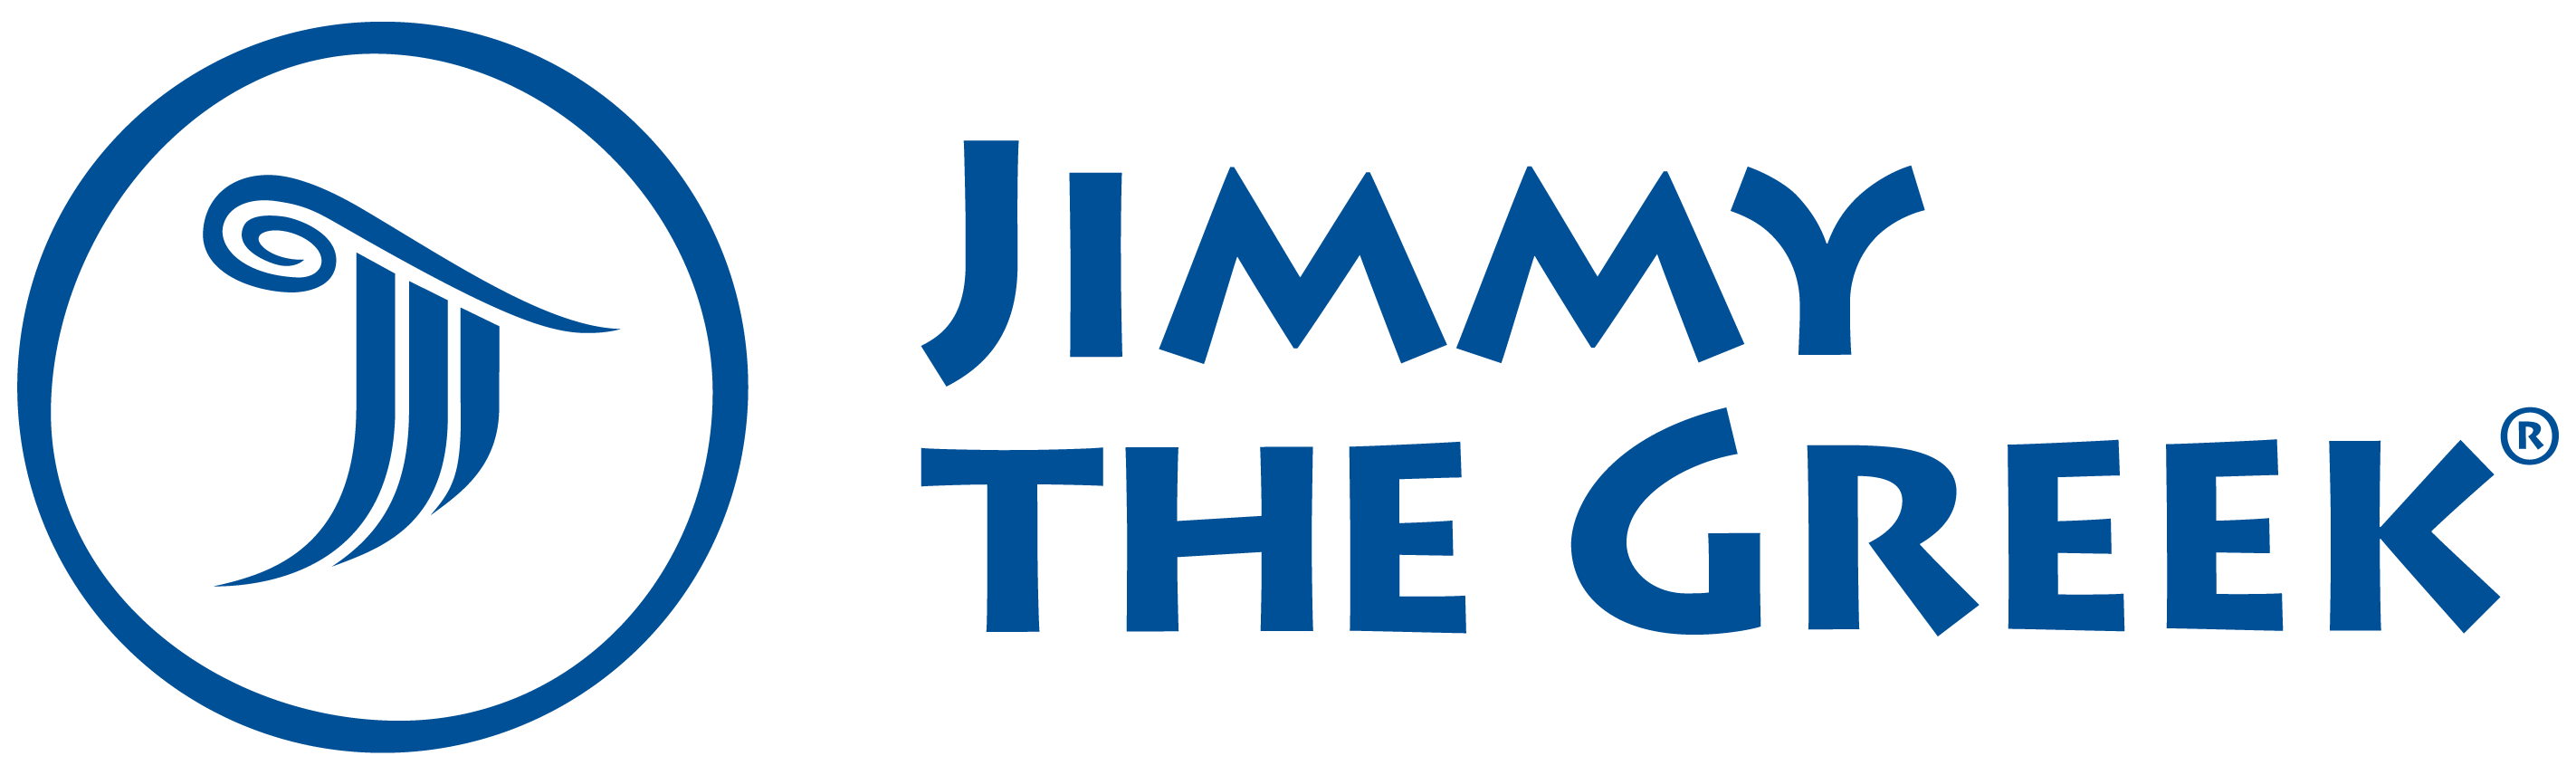 Jimmy the Greek logo